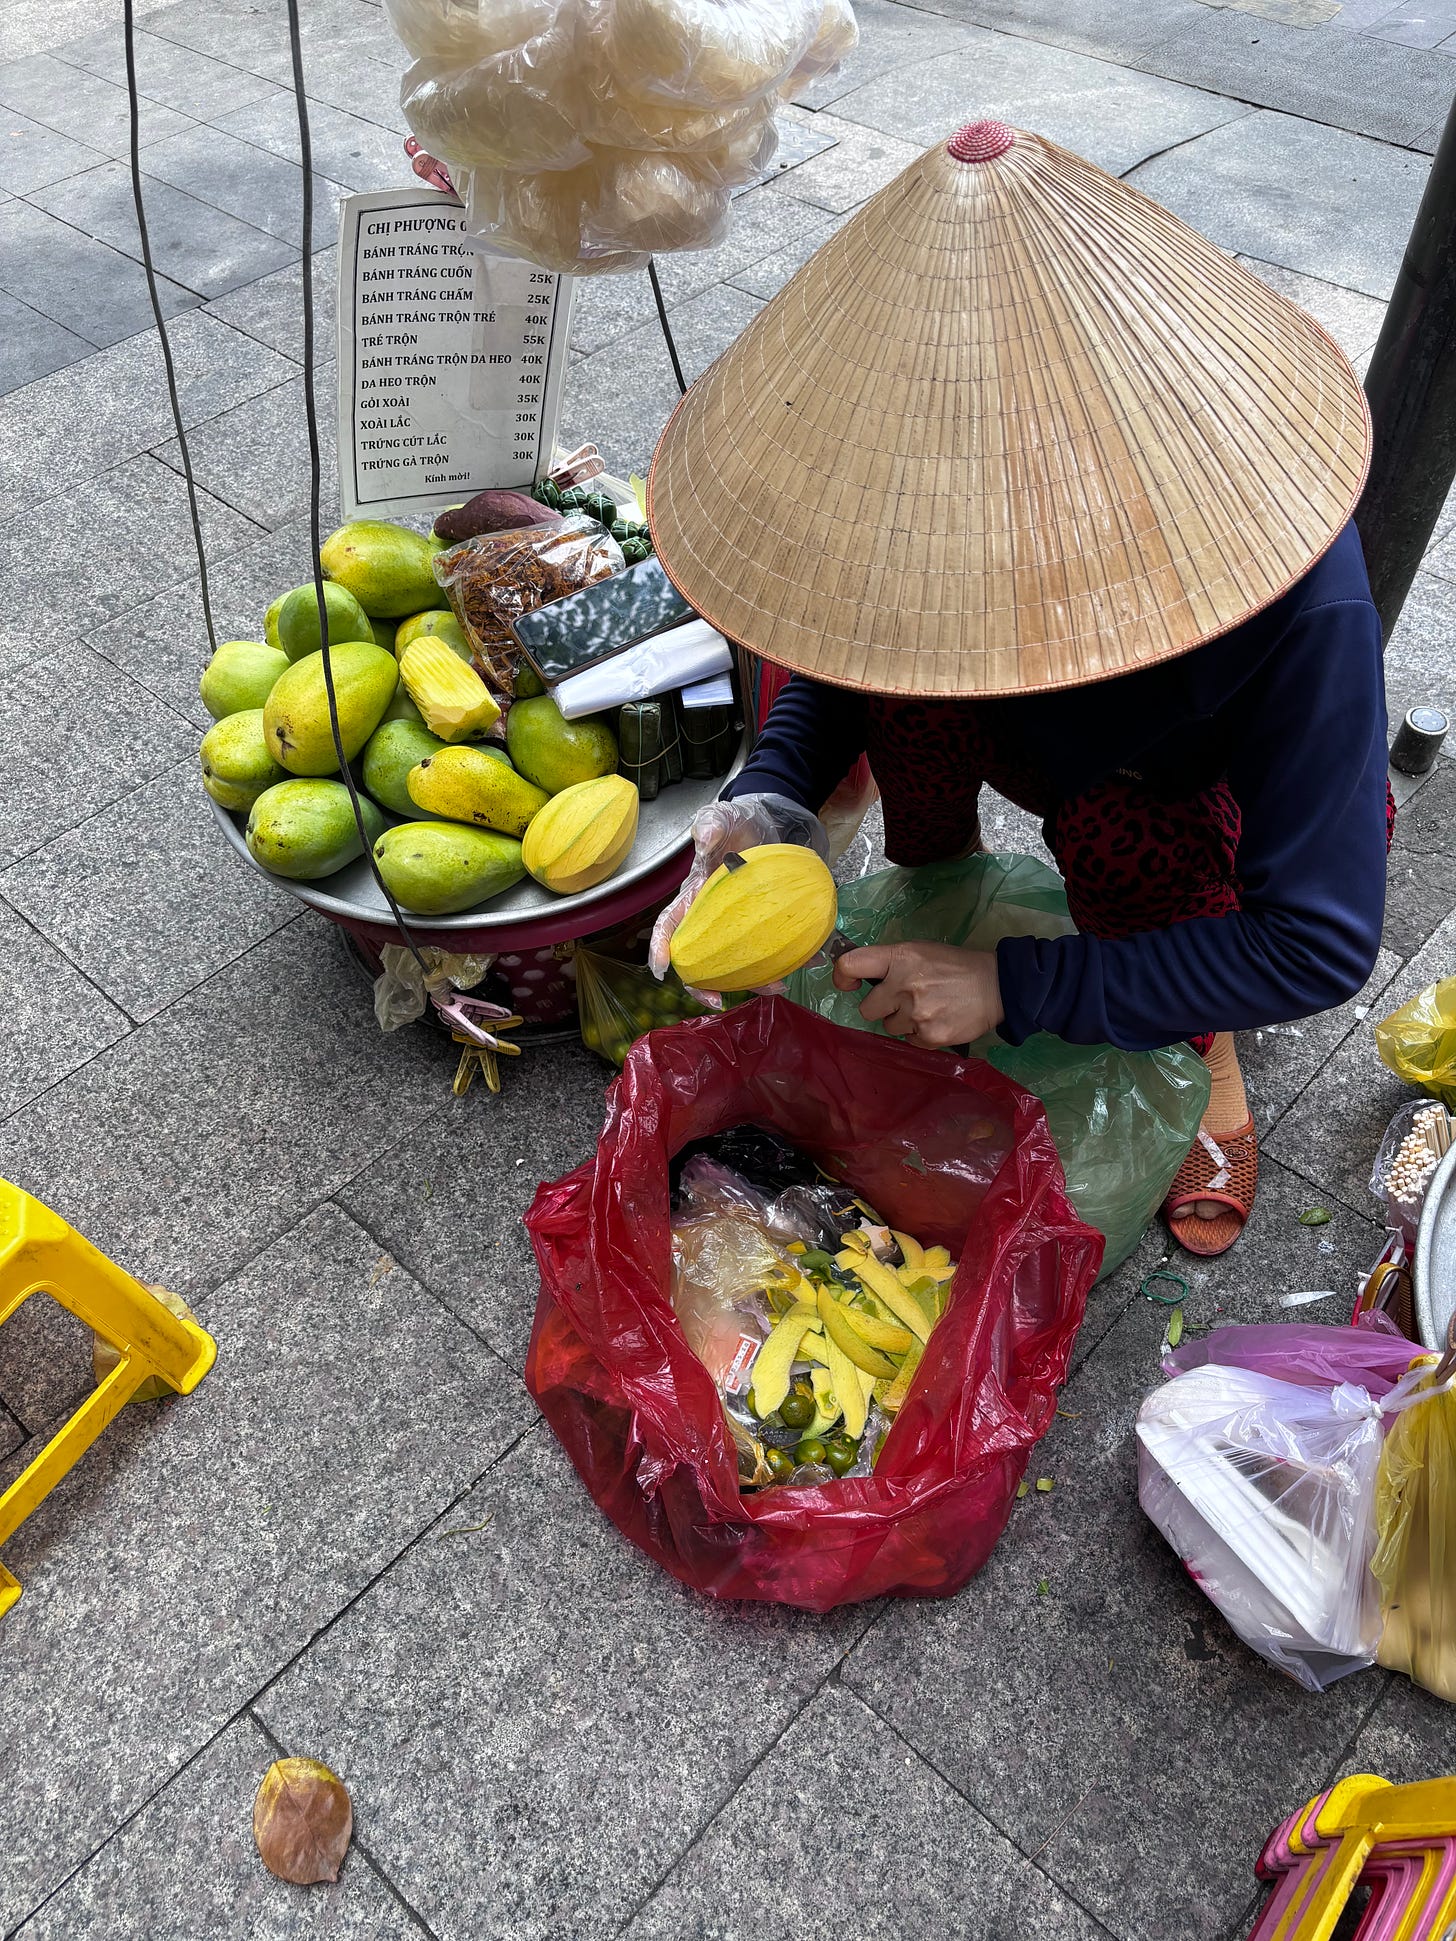 Vietnamese woman selling mangos